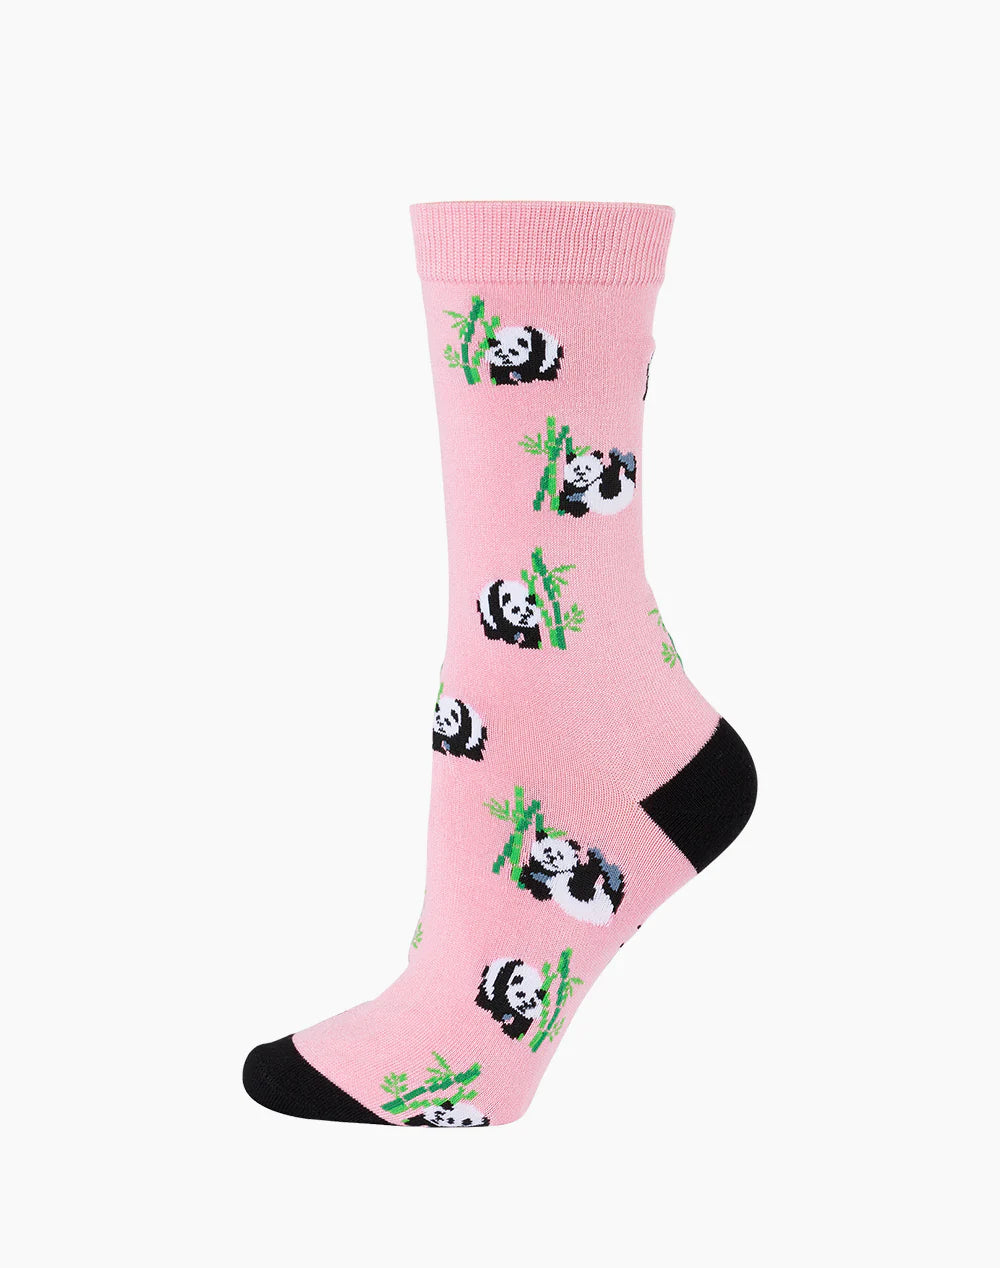 Panda on Pink Women's Bamboo Crew Socks - The Sockery